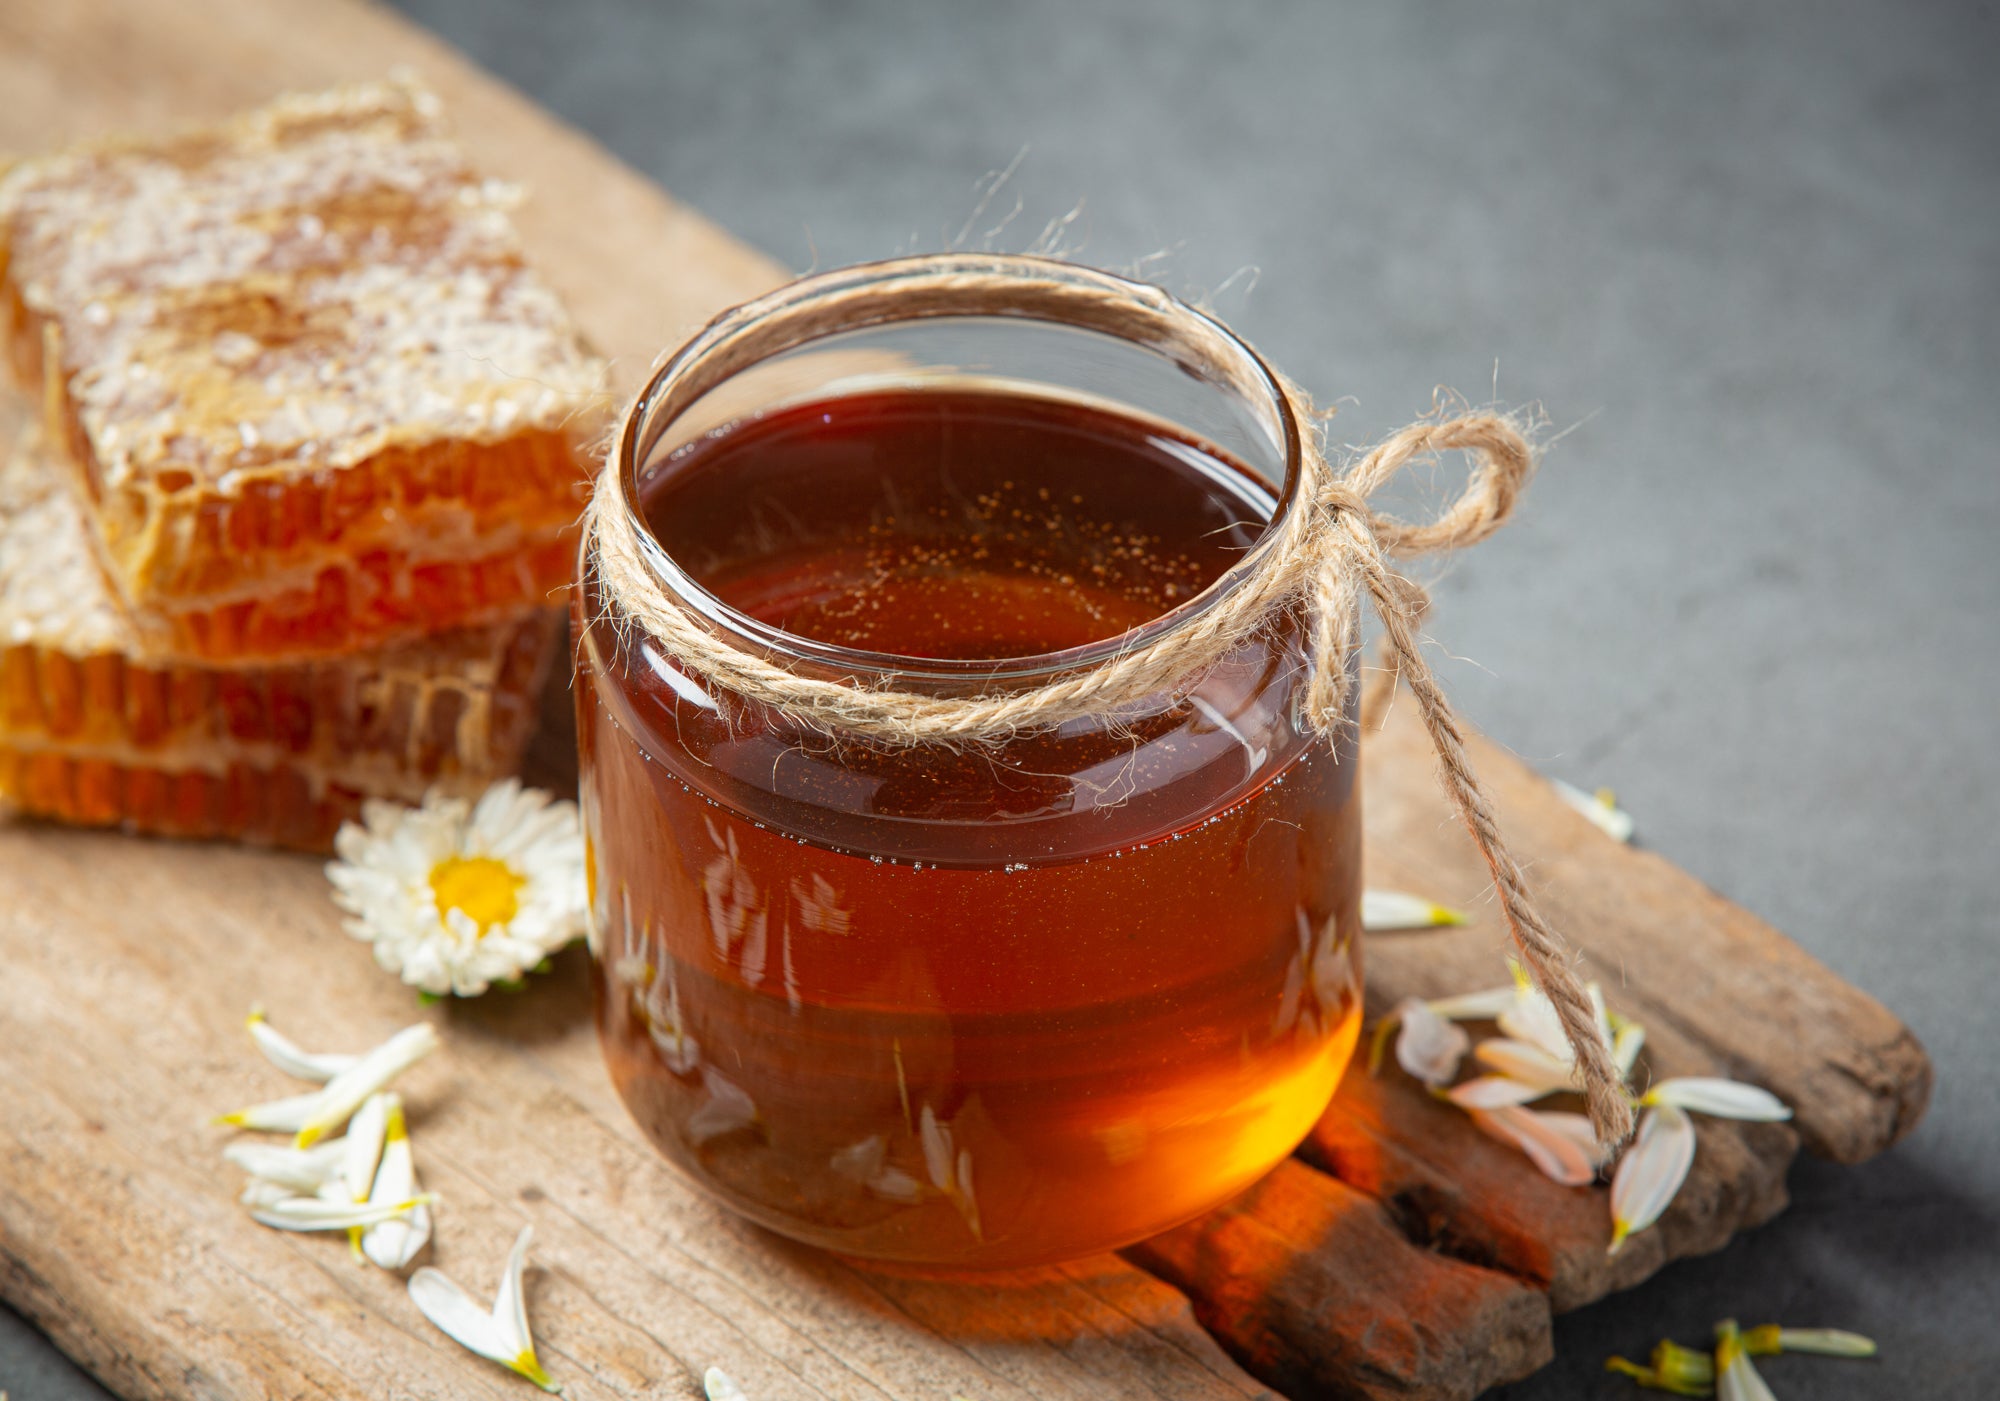 Honig & Honigprodukte